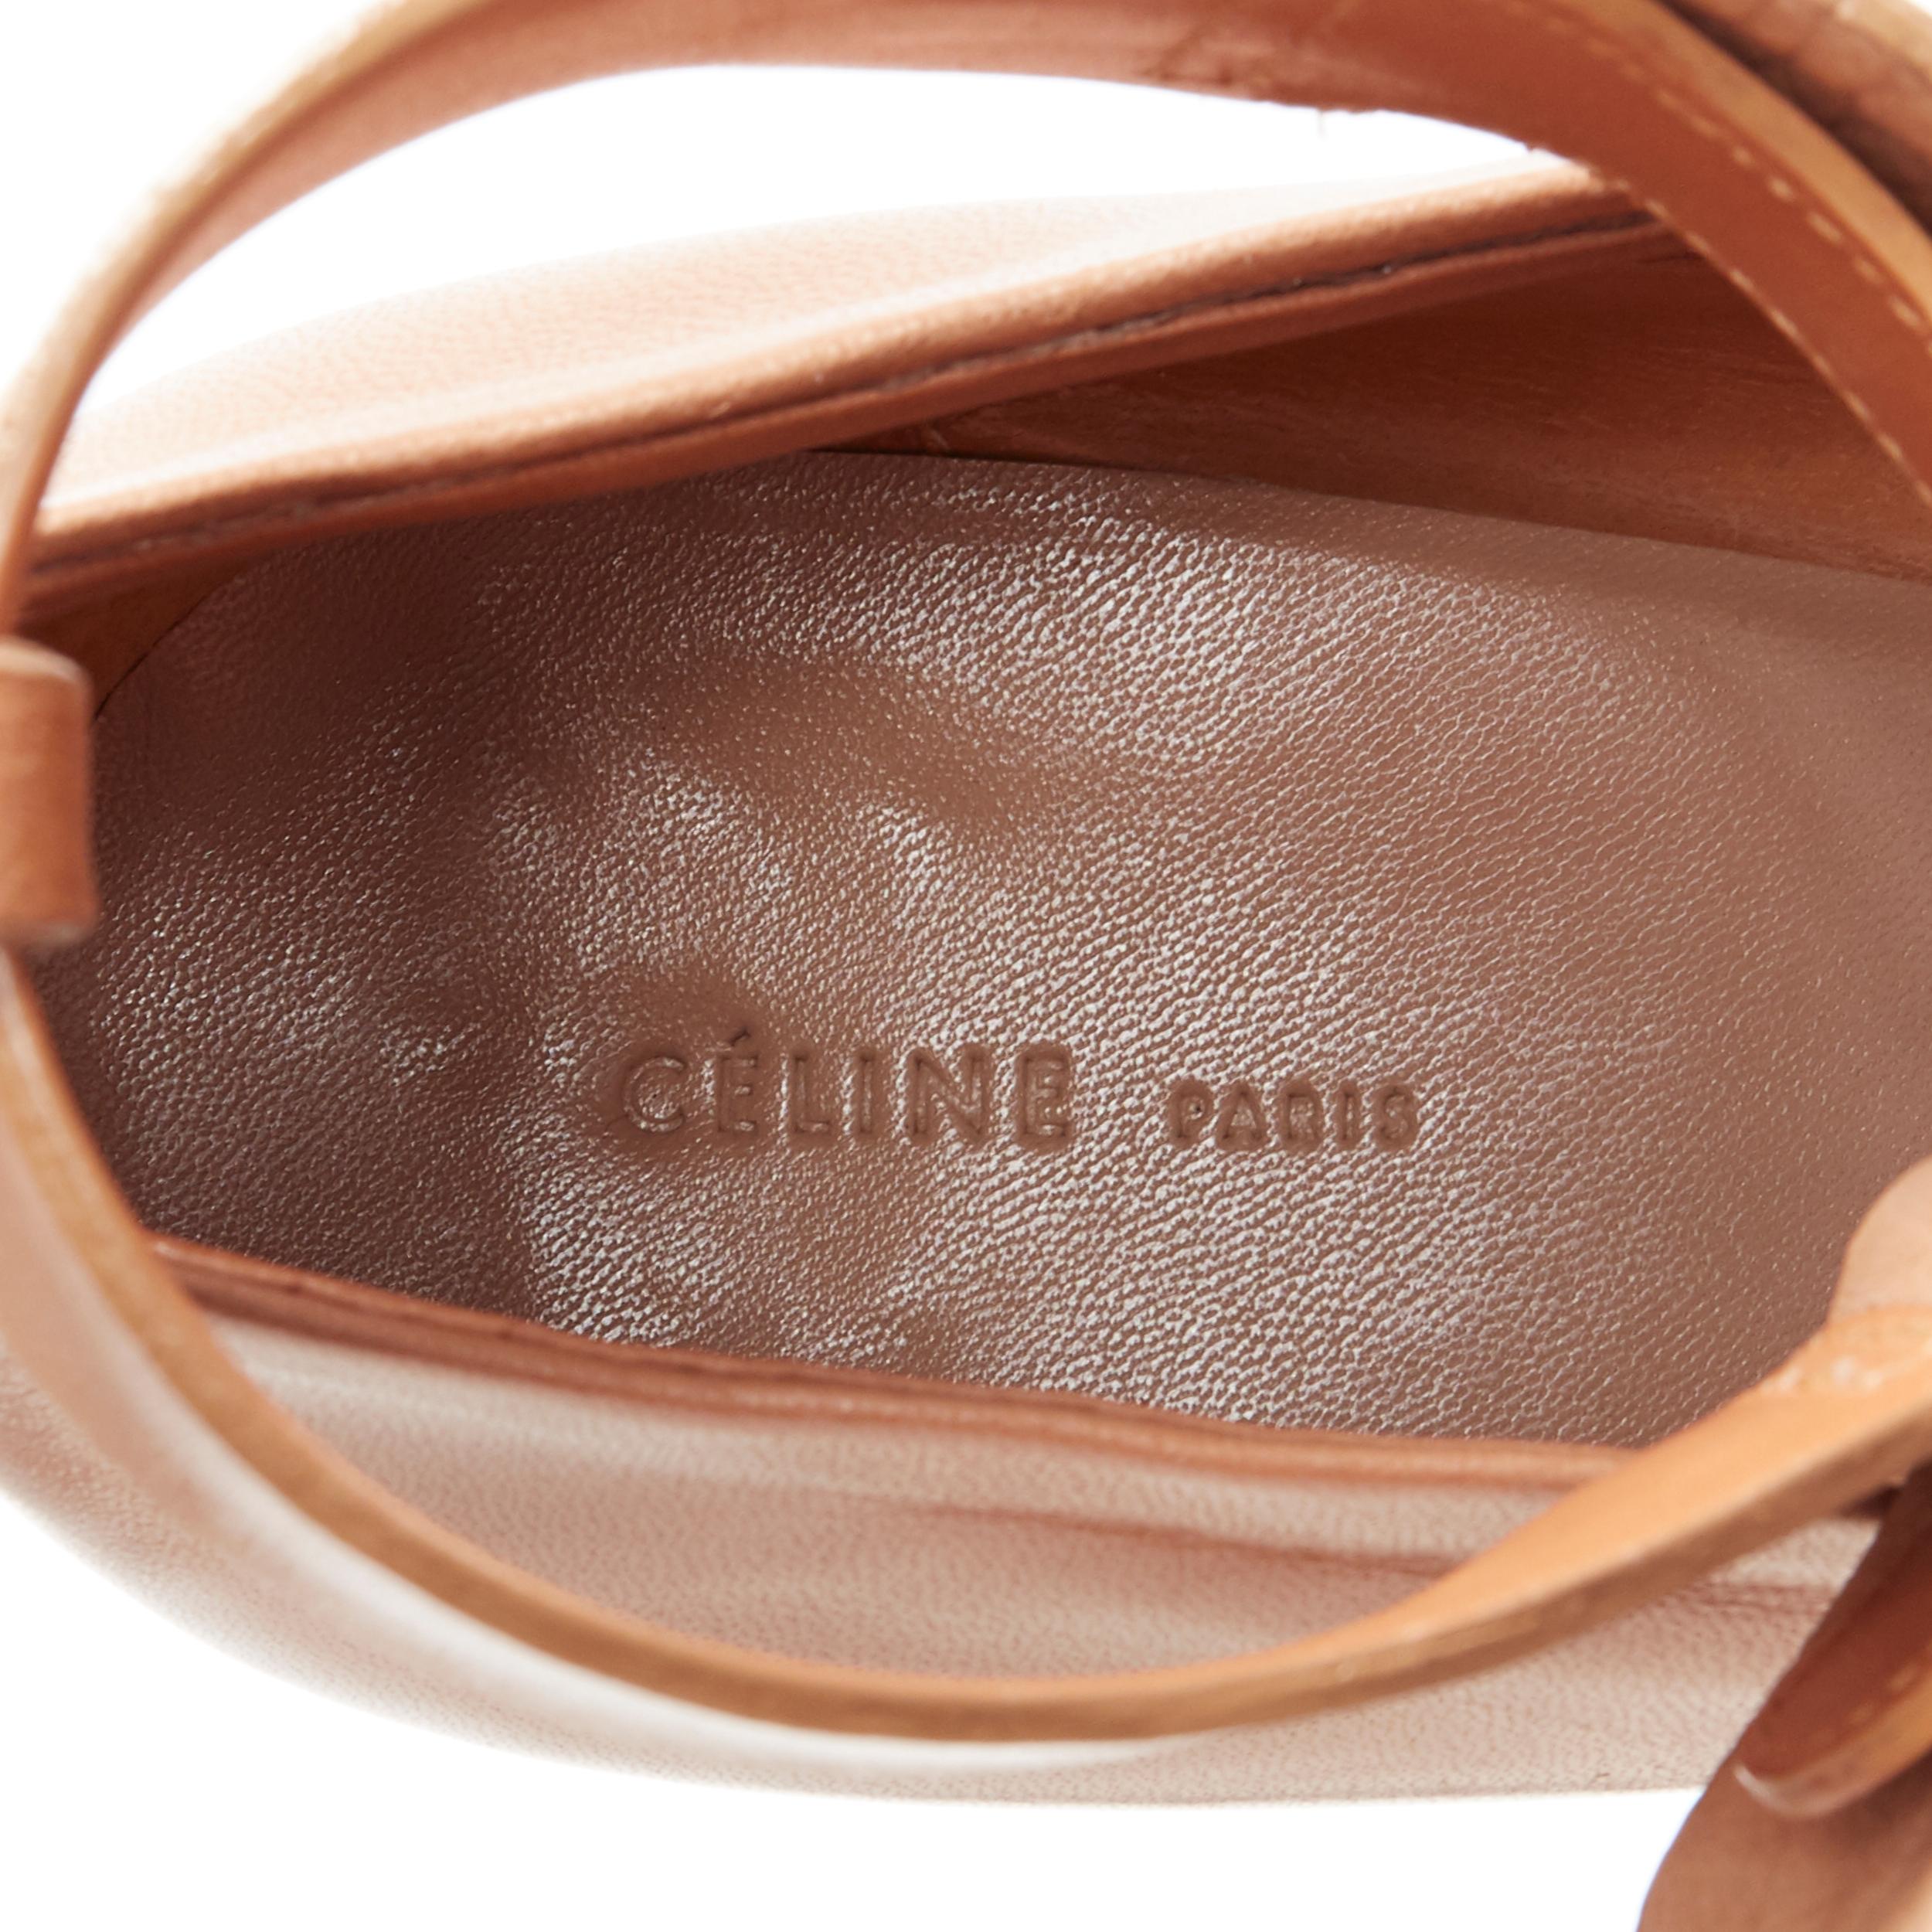 CELINE PHOEBE PHILO tan brown leather open toe silver metal glove heel EU37.5 3